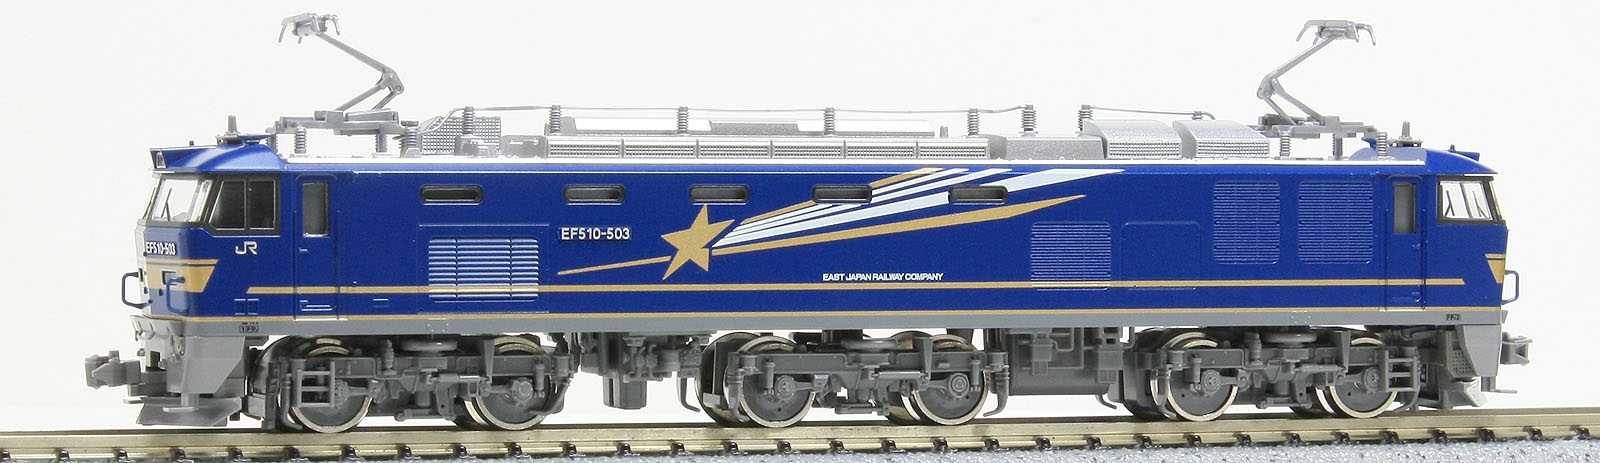 JR EF510-500形電気機関車 鉄道模型 おもちゃ おもちゃ・ホビー・グッズ ホットセール